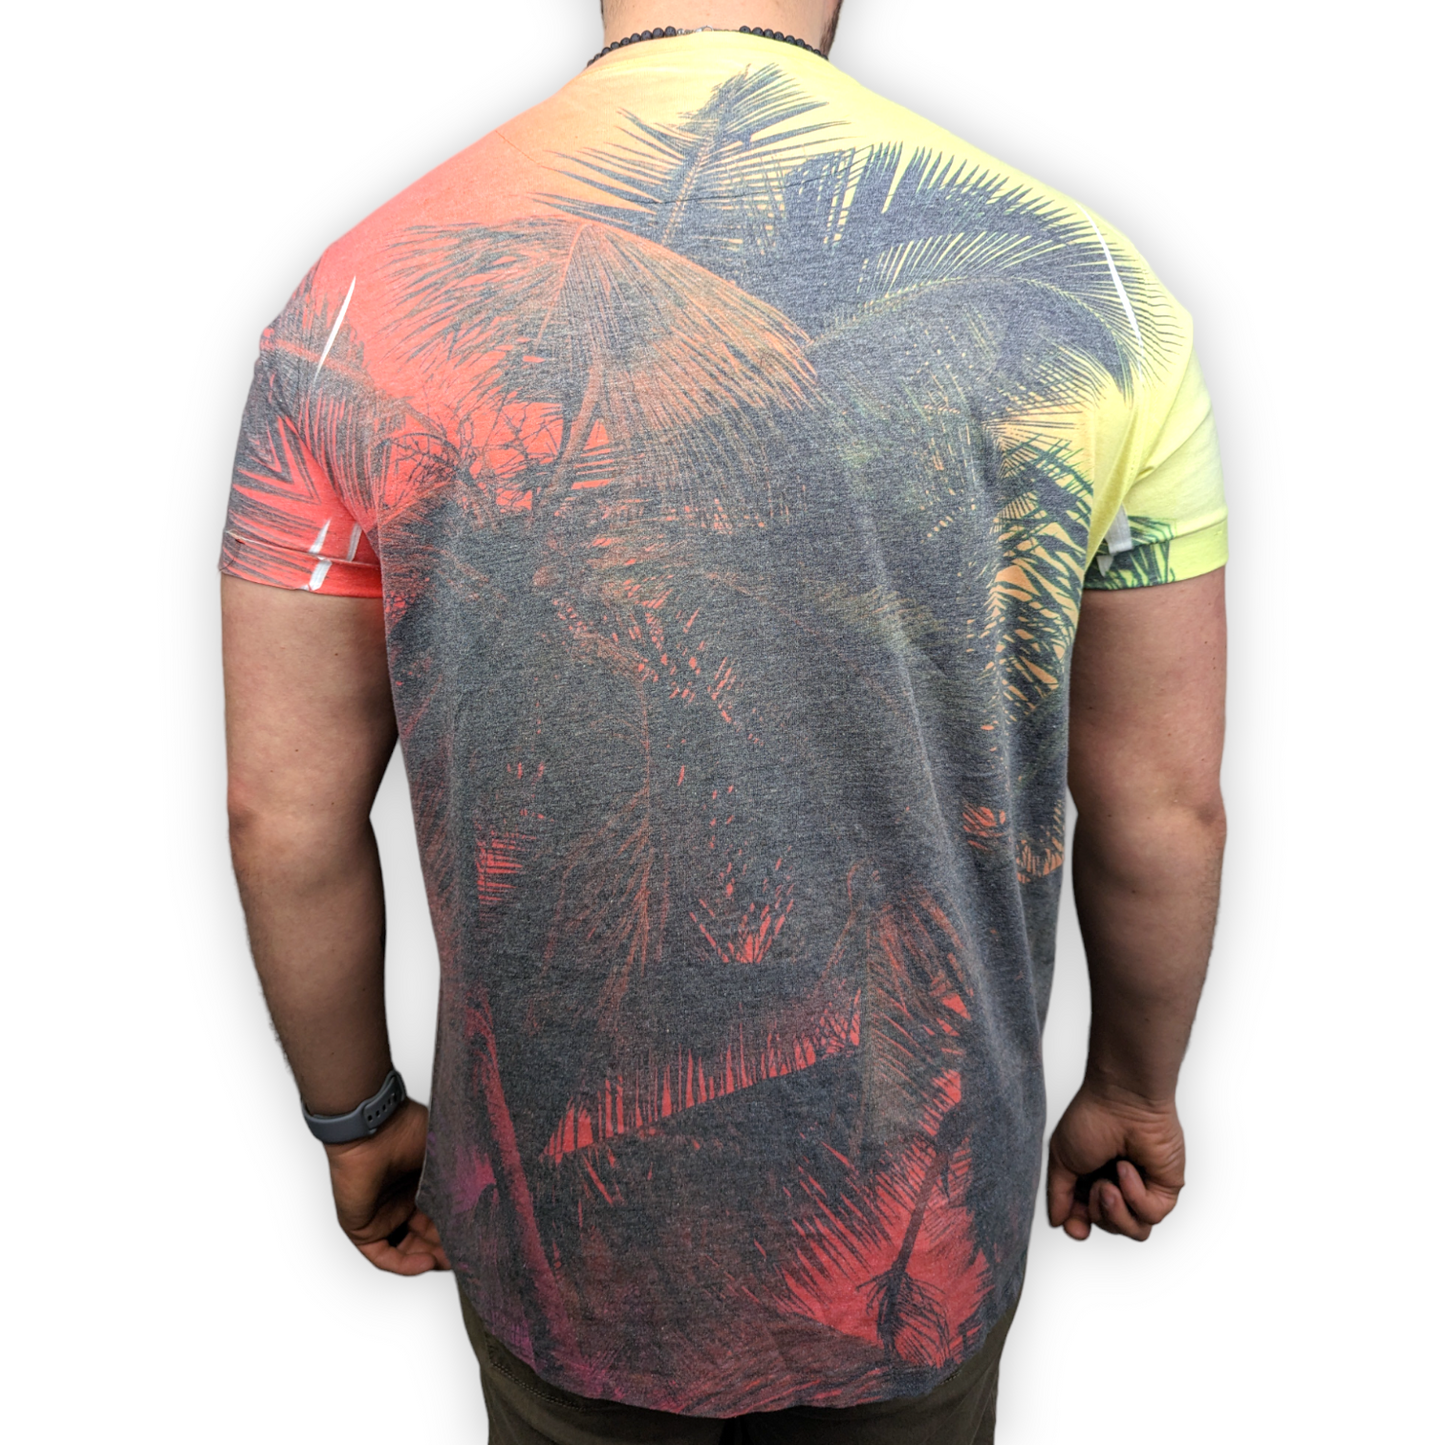 Diesel Life South Beach F.L. Multicolour Palm Tree Print T-shirt Men Large